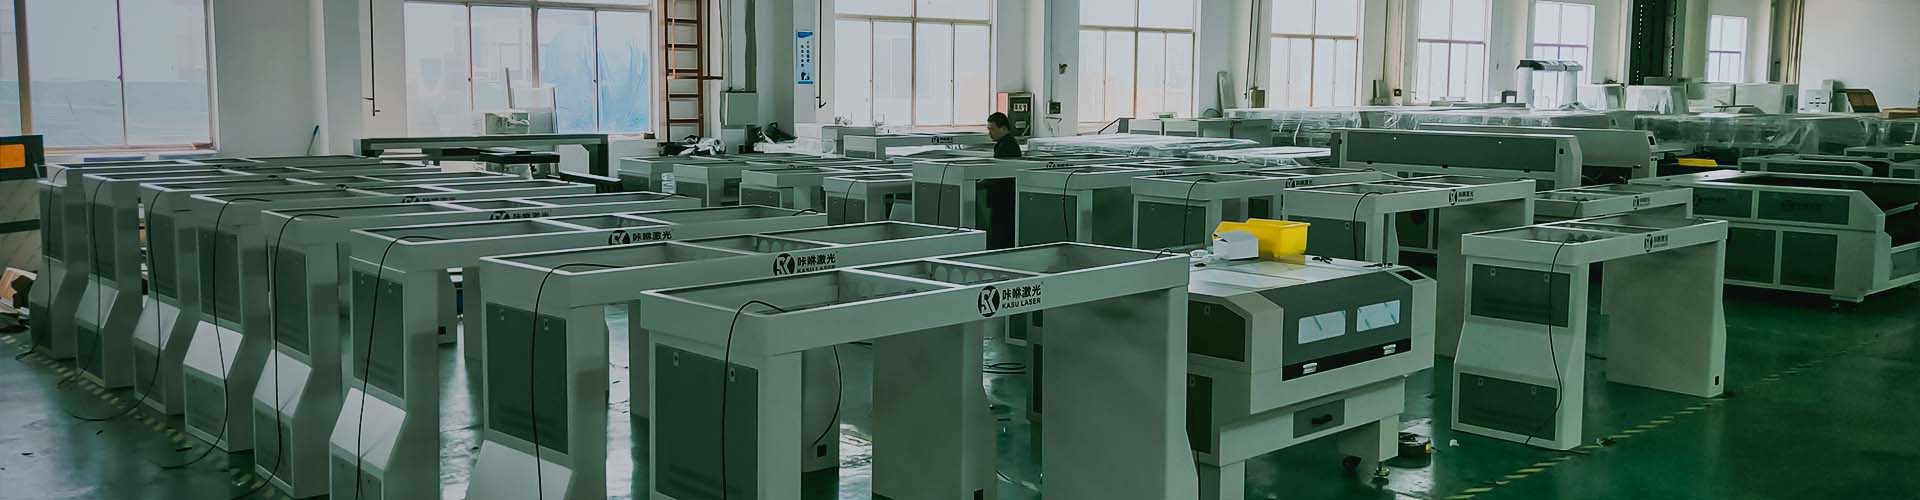 Custom Garment Laser Cutting Machine Factory in China